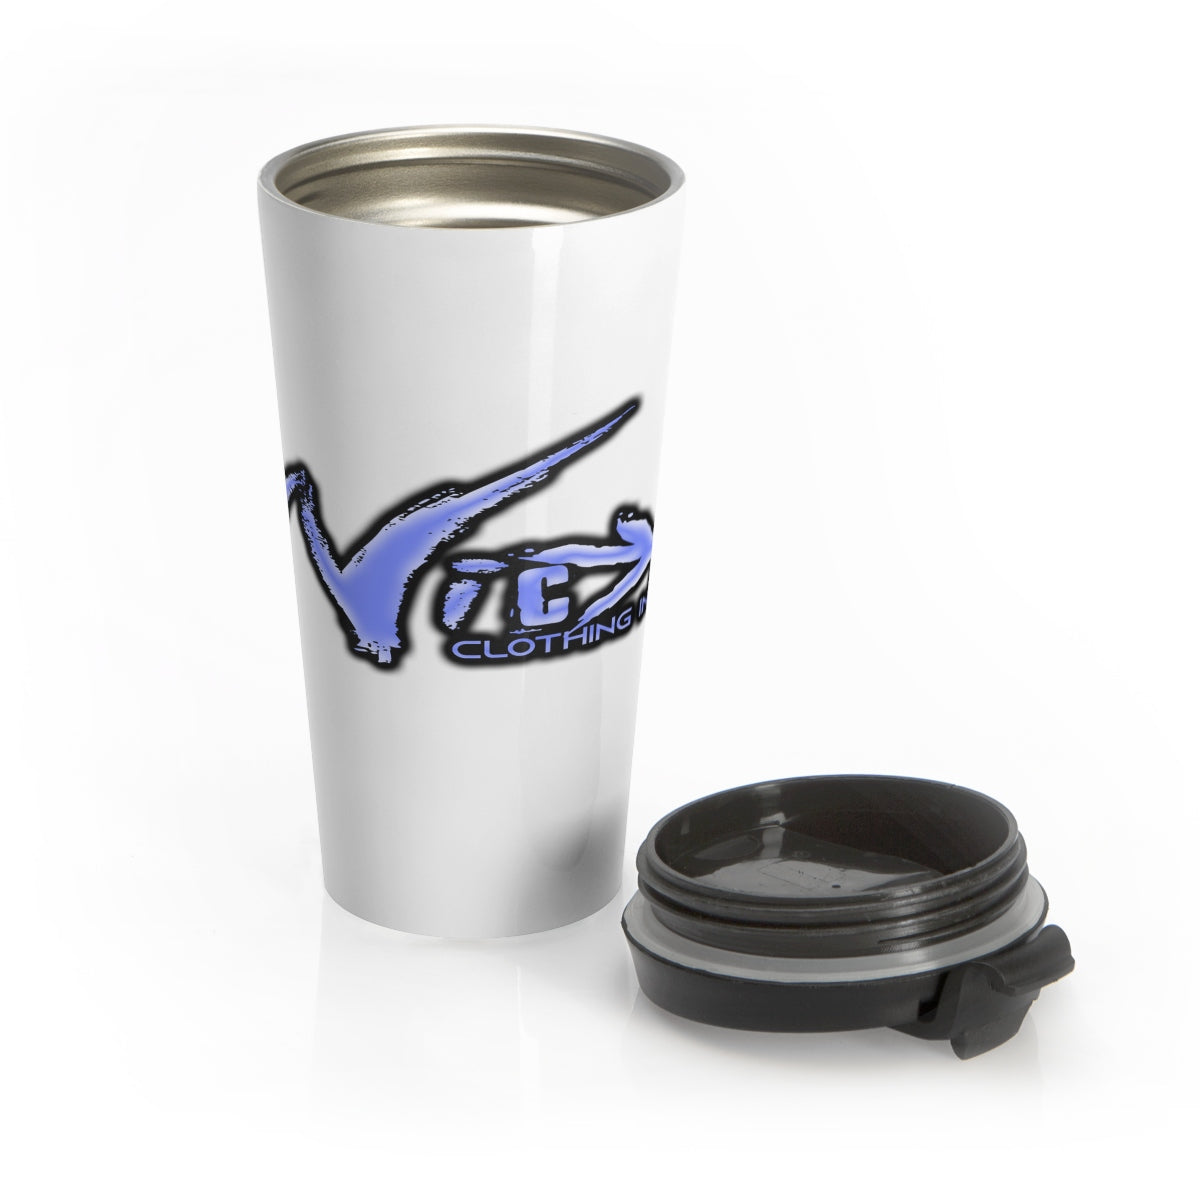 ICE/Stainless Steel Travel Mug